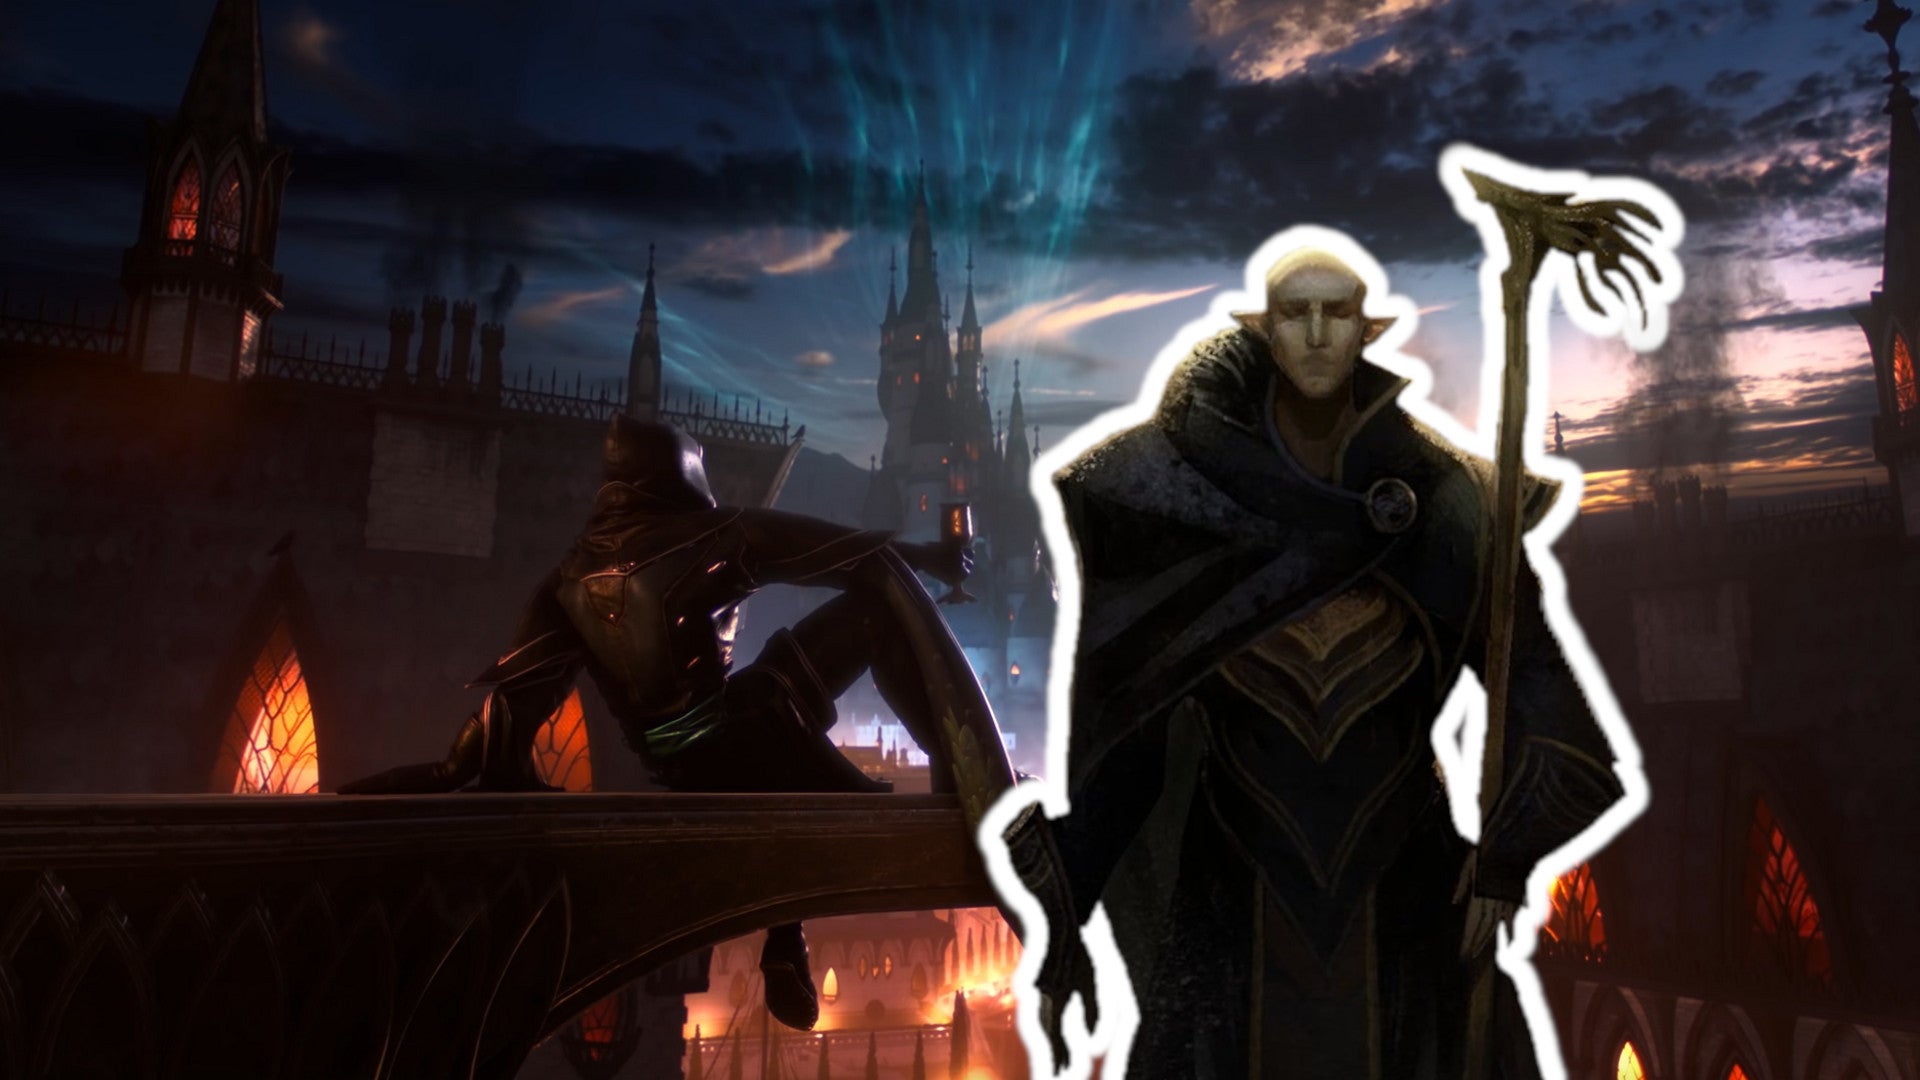 Dragon Age Dreadwolf: Alpha-Material geleakt, God of War als Inspiration?